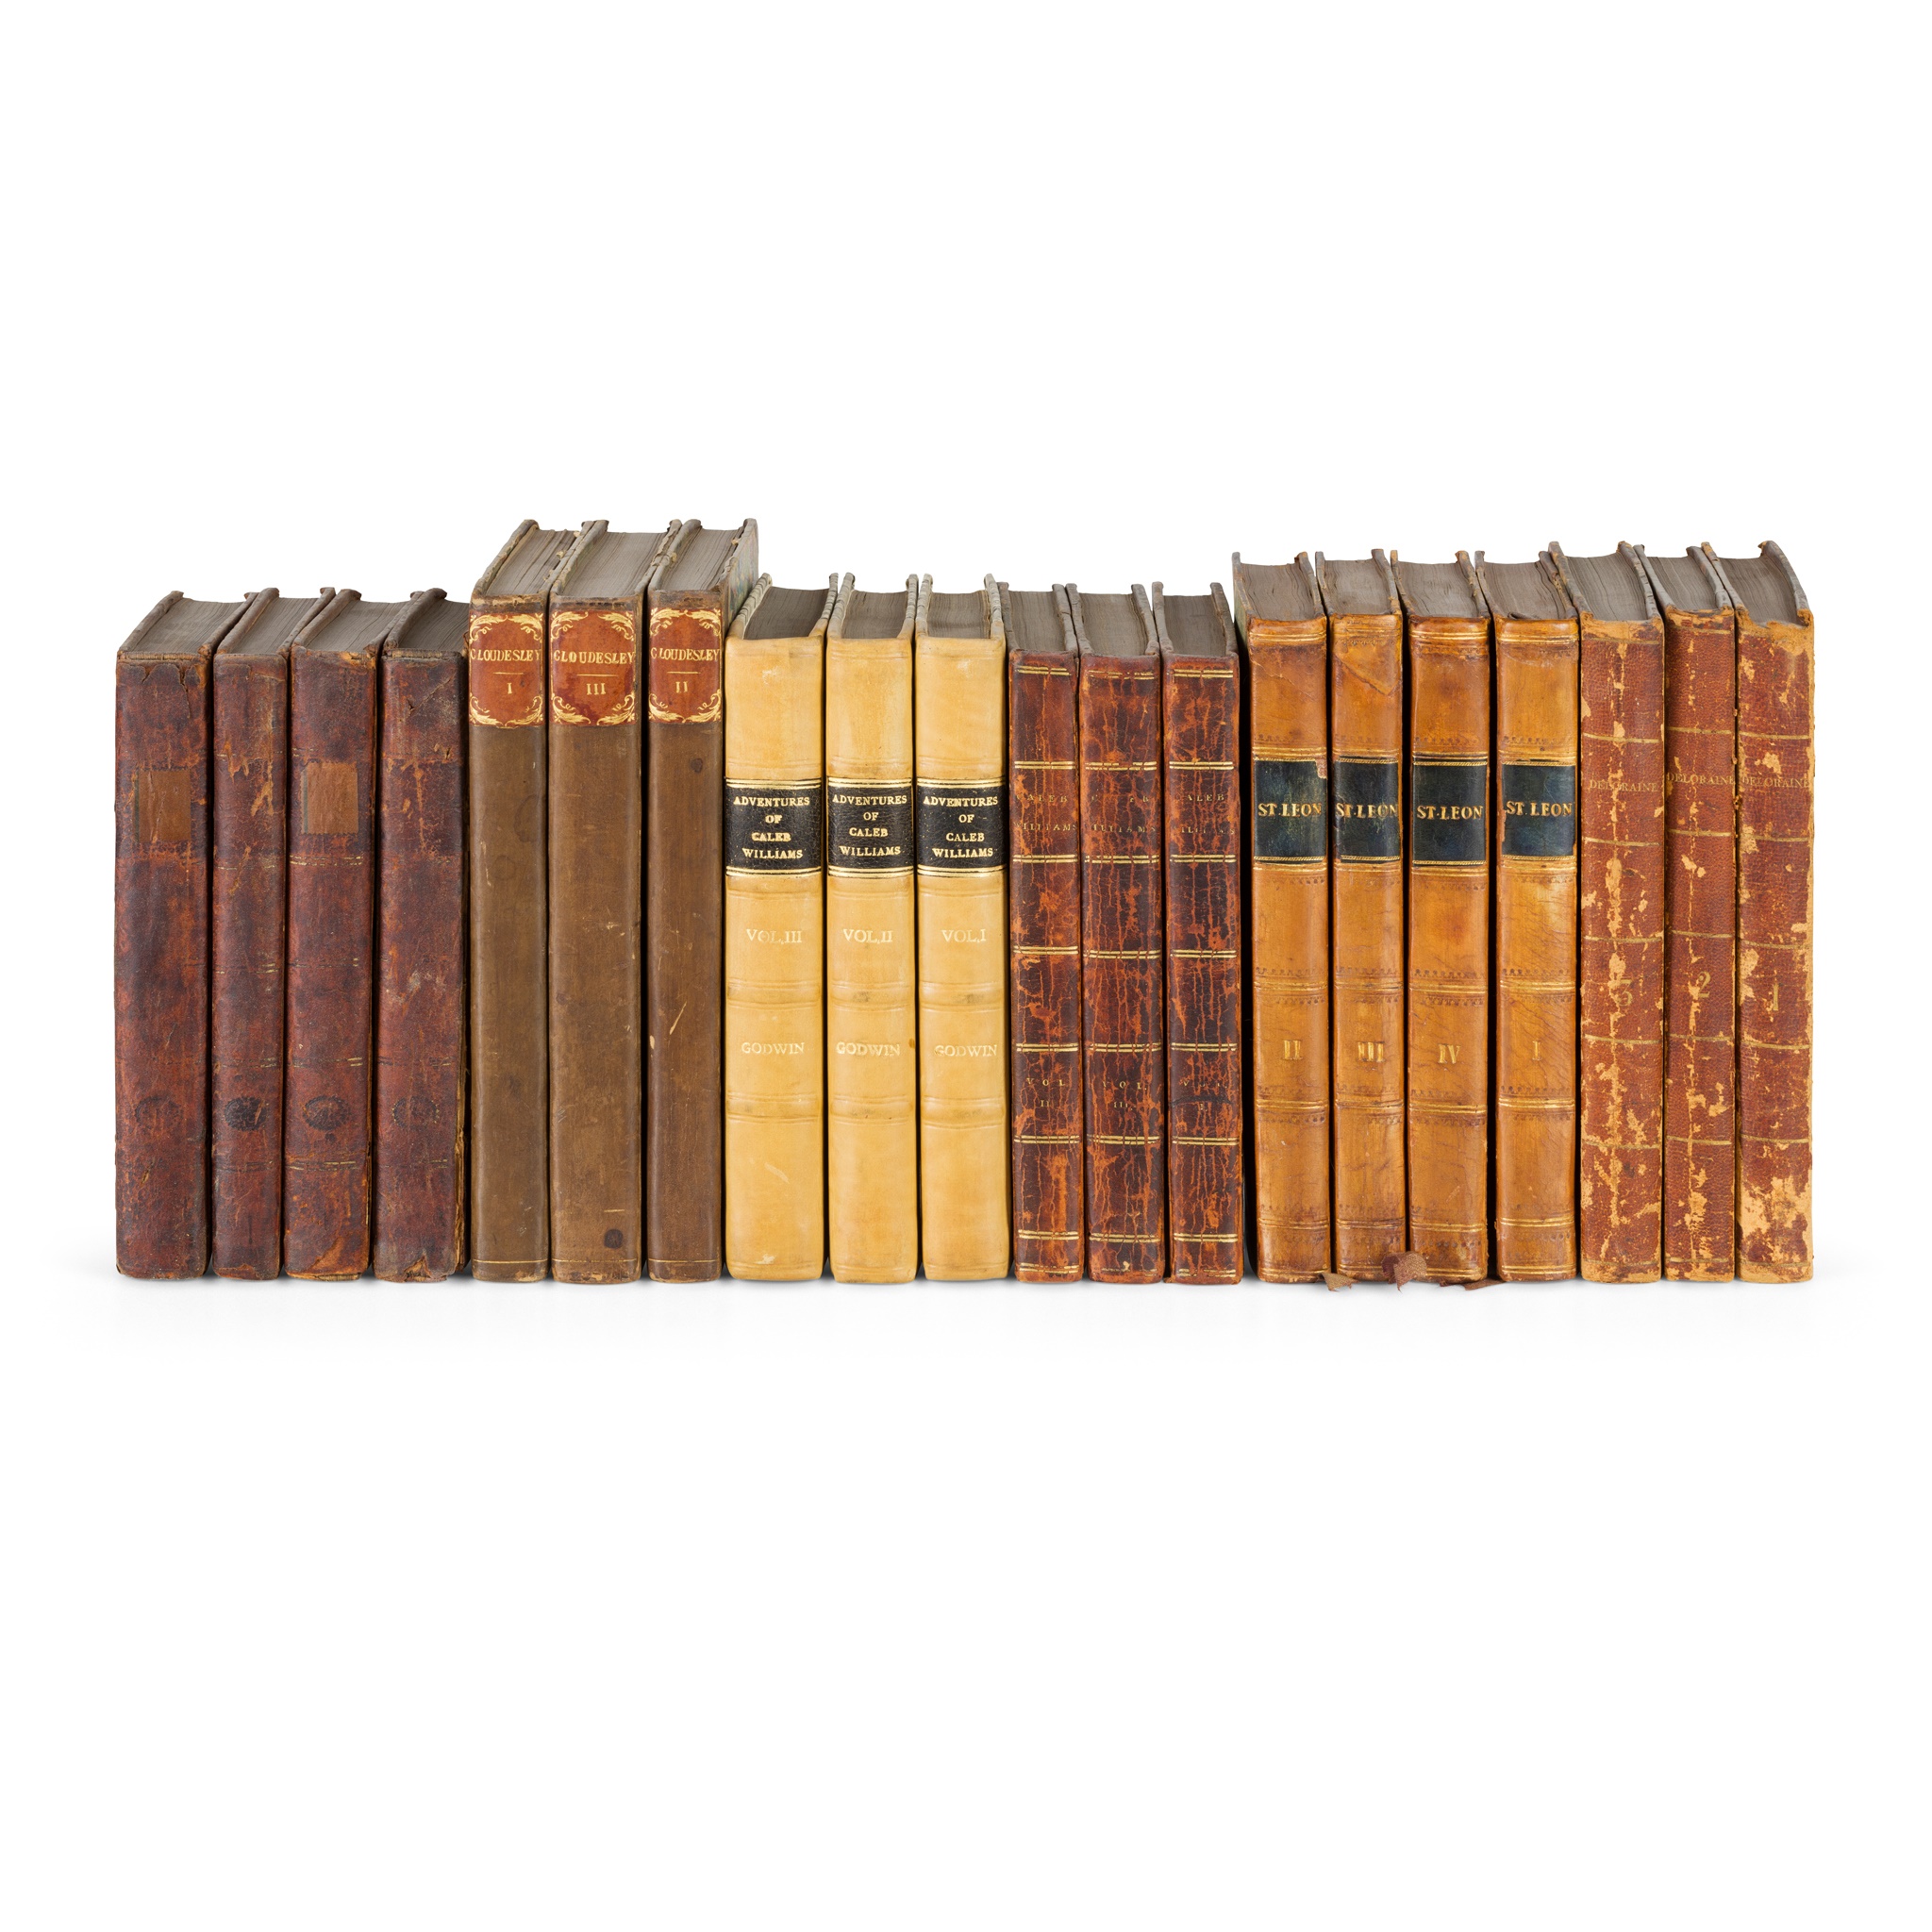 Godwin, William 6 novels in 20 volumes, comprising